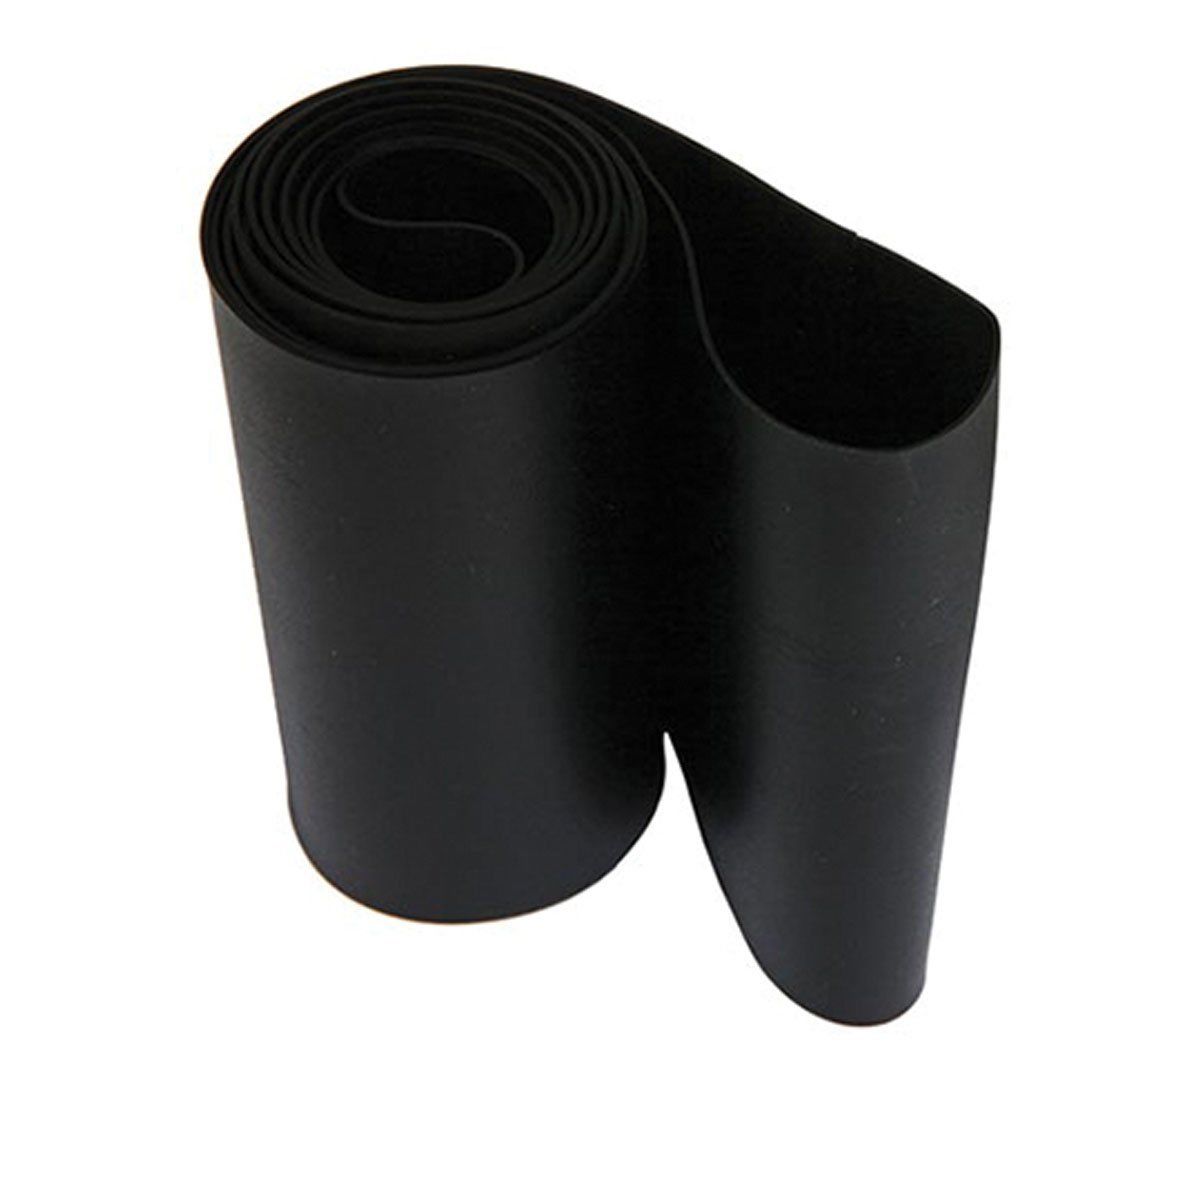 26" SE Racing Nylon Rim Strip - Pair - 60mm wide - Black - for Fat Ripper /fat tire rims